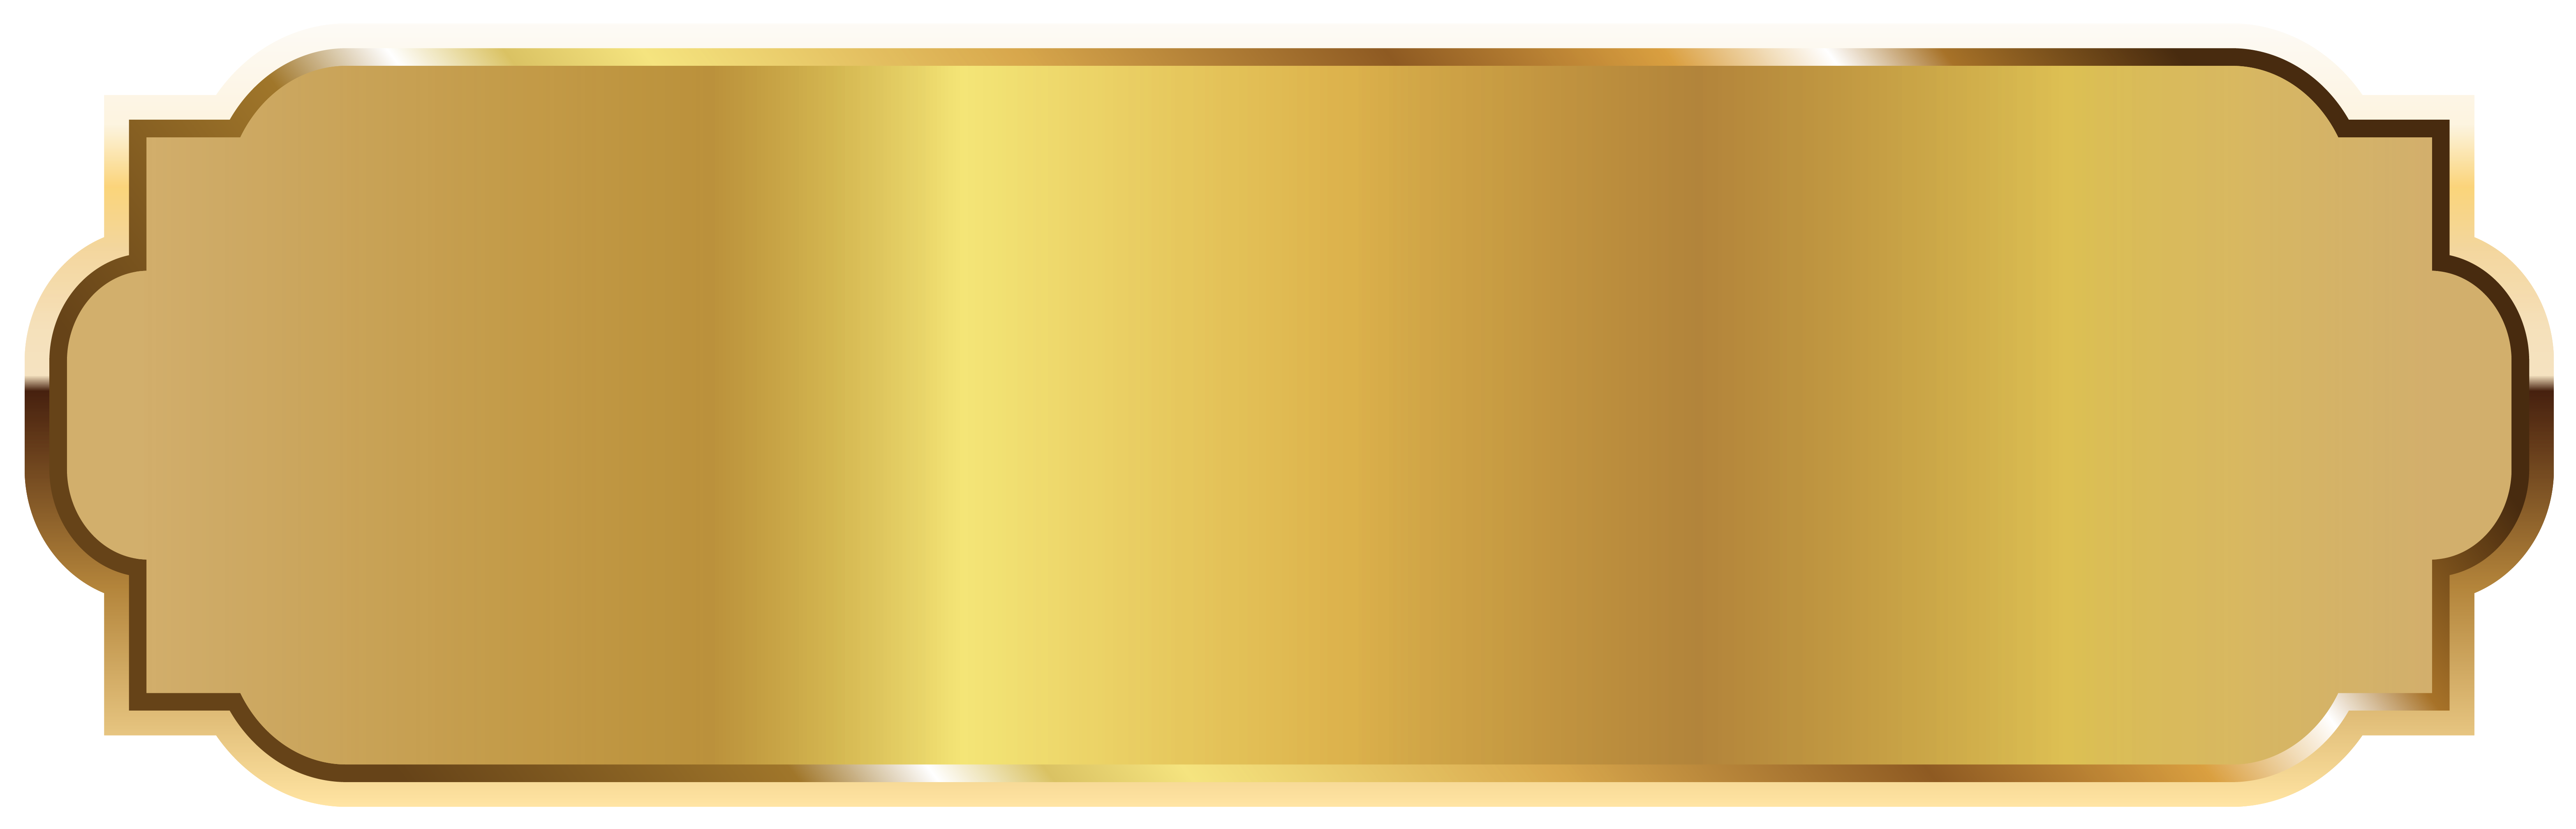 Gold Clip Art Transparent File